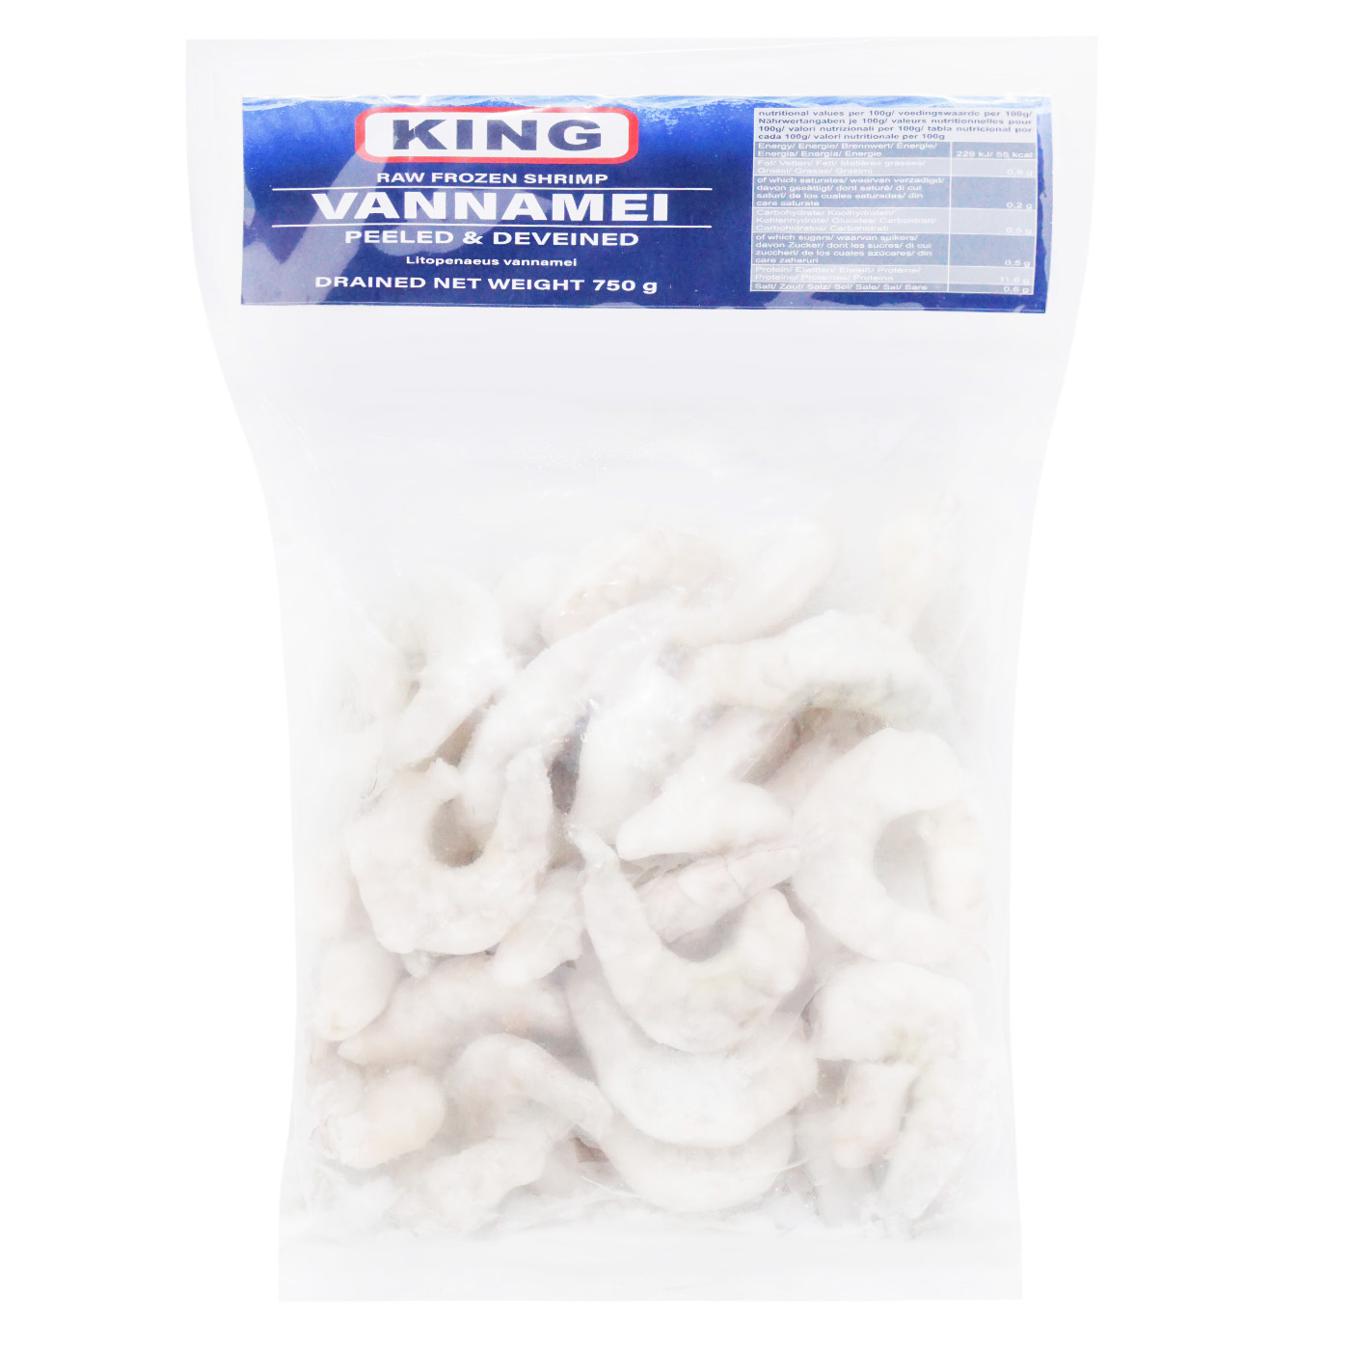 King vannamei shrimp cleaned in glaze frozen 16/20 25% 750g